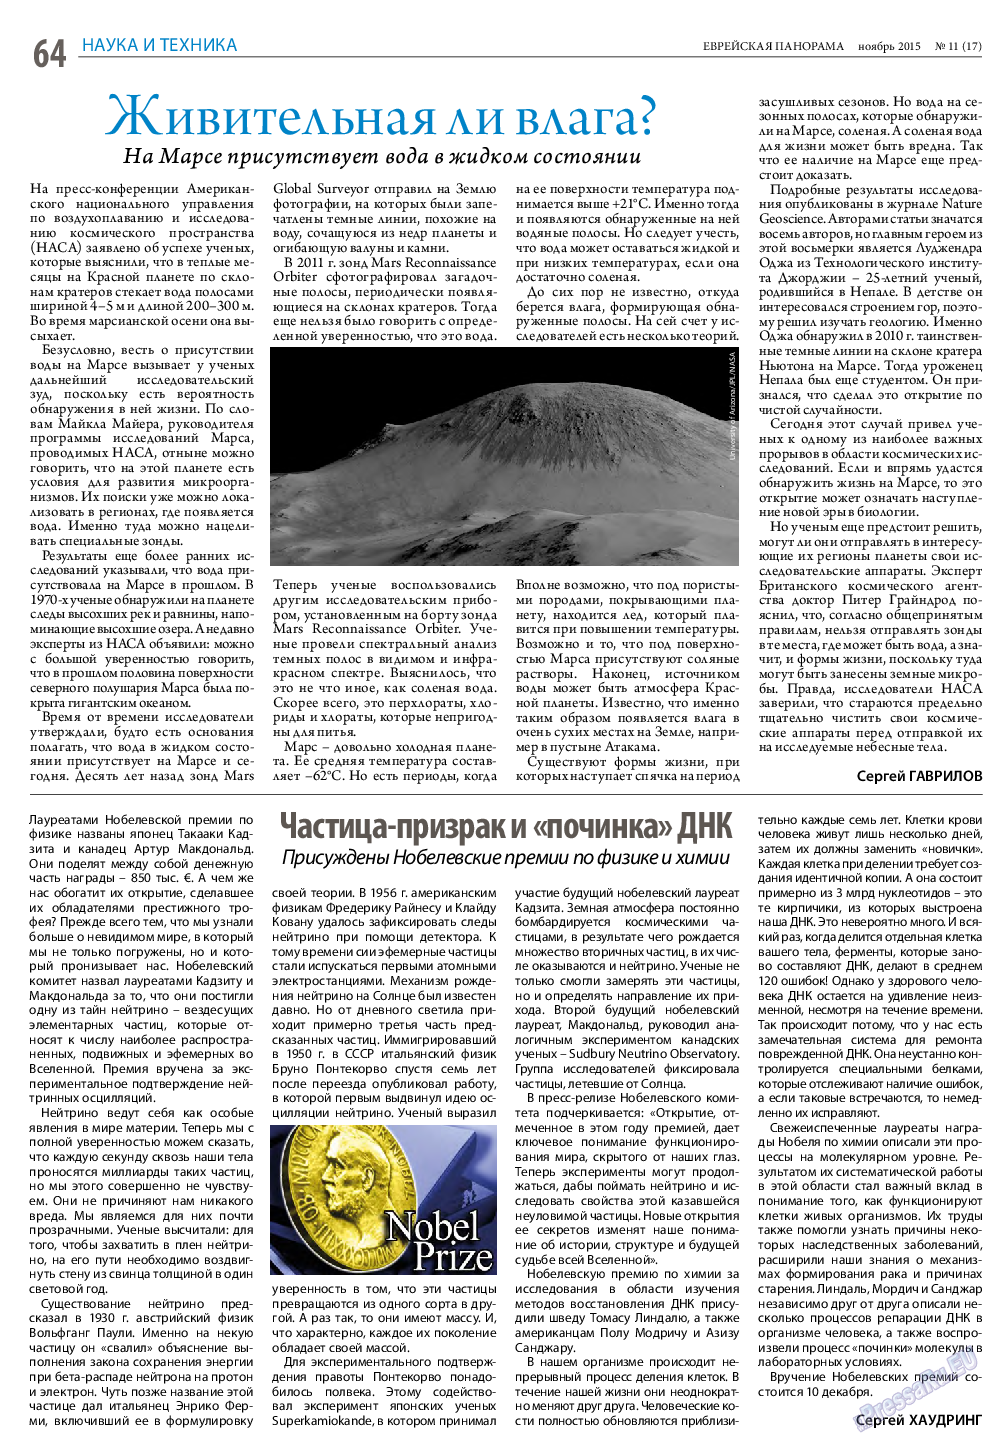 Еврейская панорама, газета. 2015 №11 стр.64